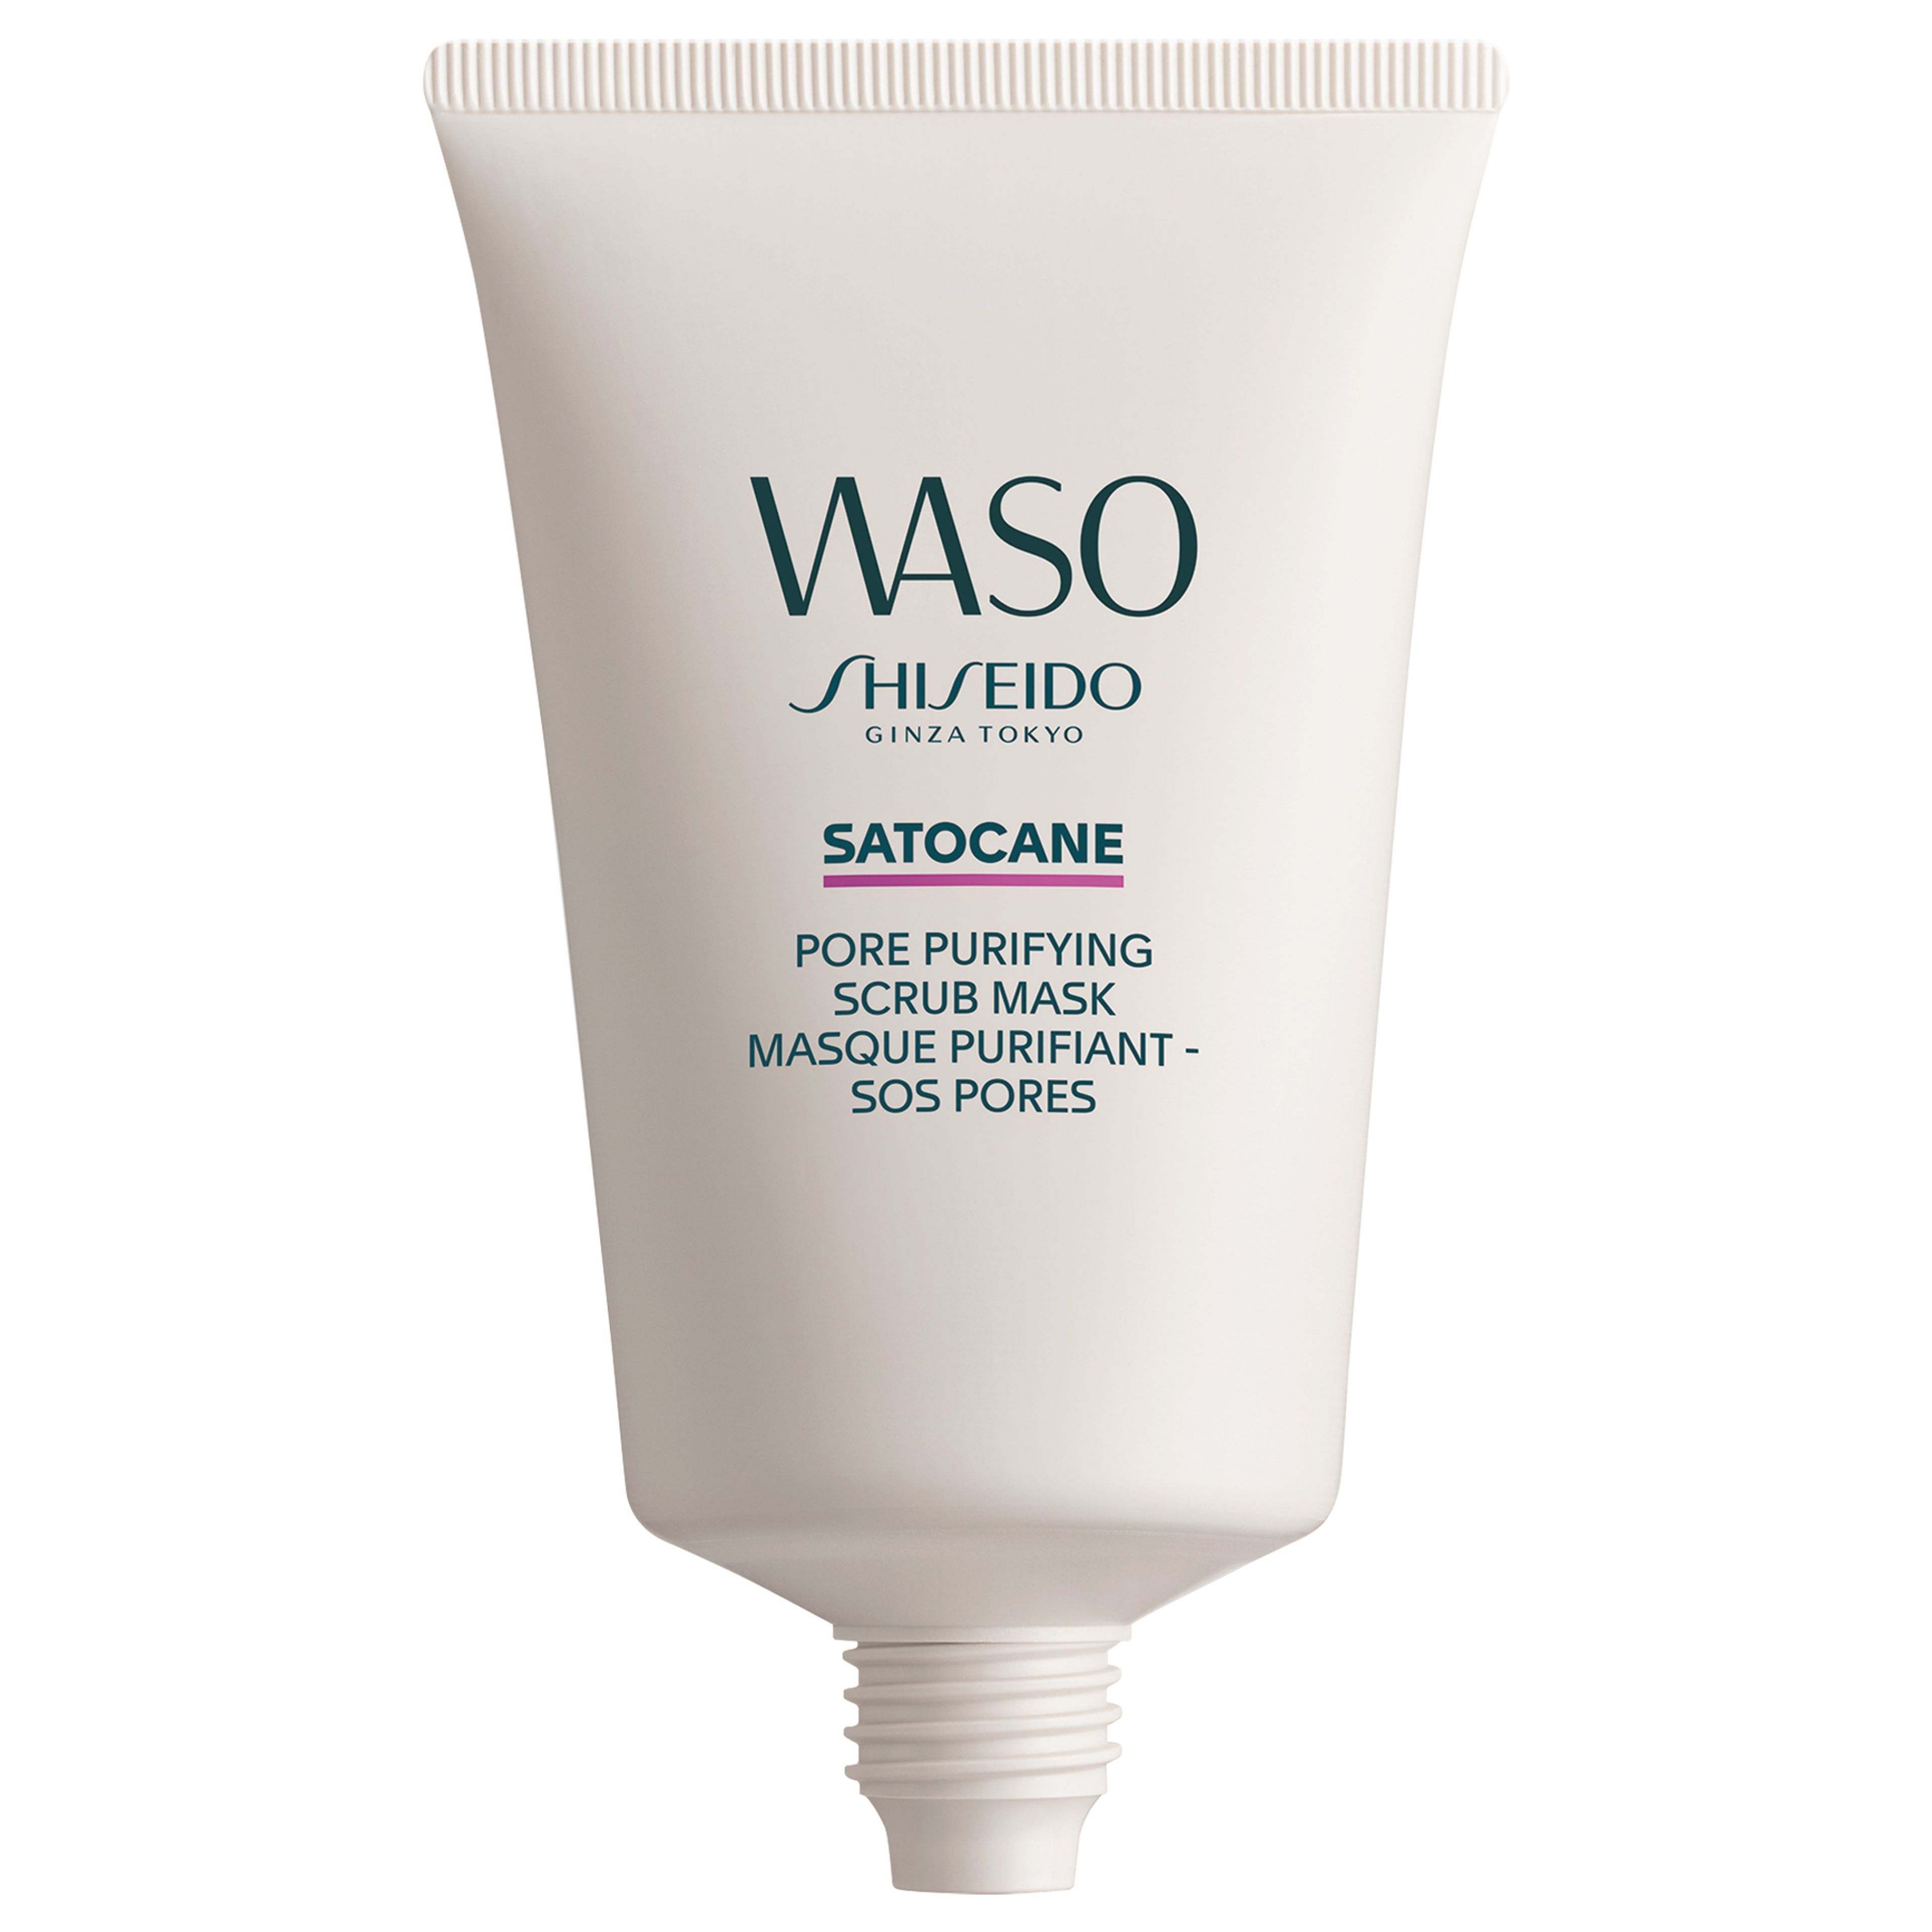 Waso Pore Purifying Scrub Mask - Maschera Purificante Shiseido 2